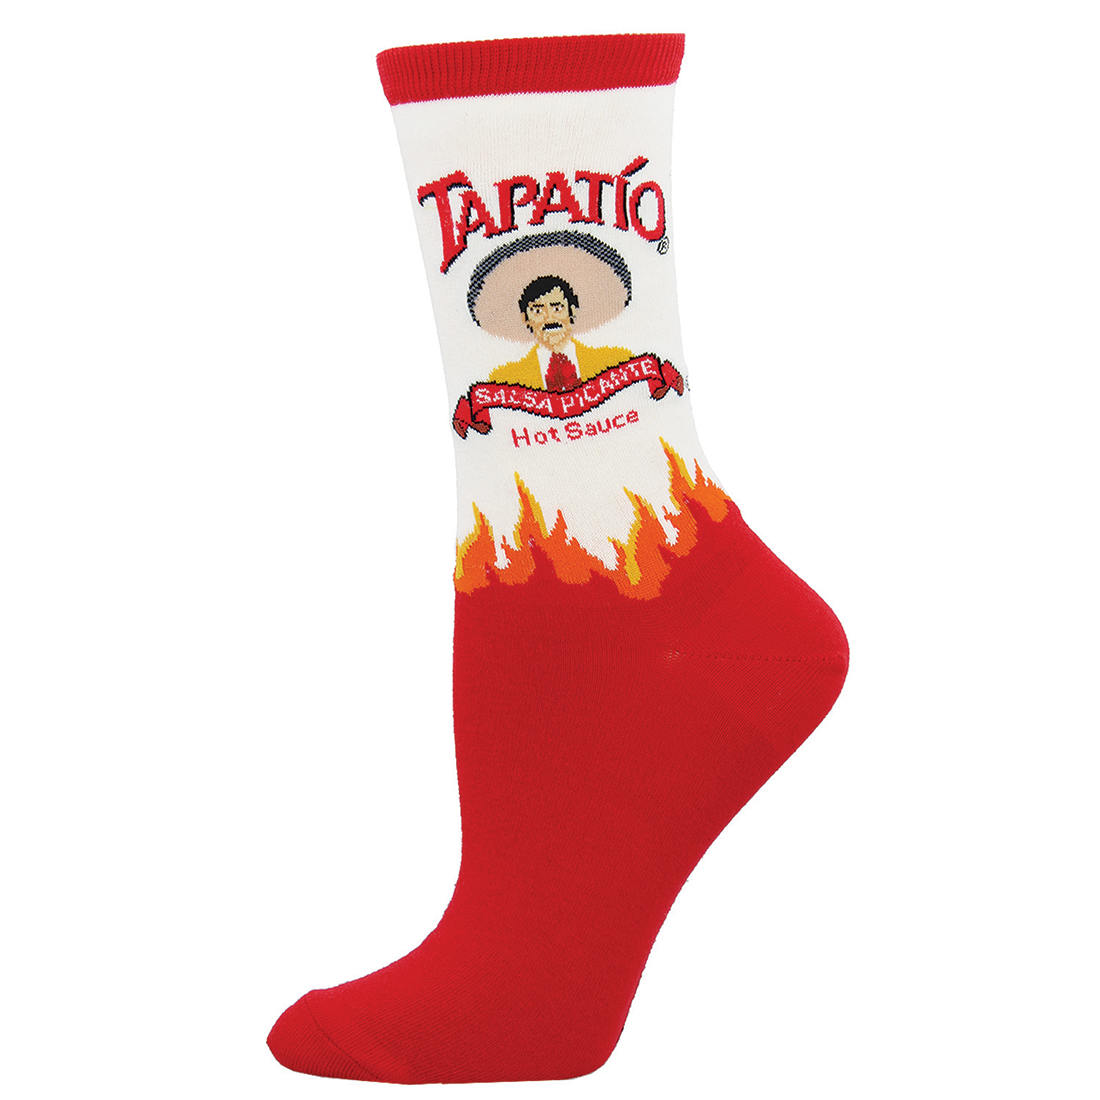 Tapatio White Novelty Socks - Women's